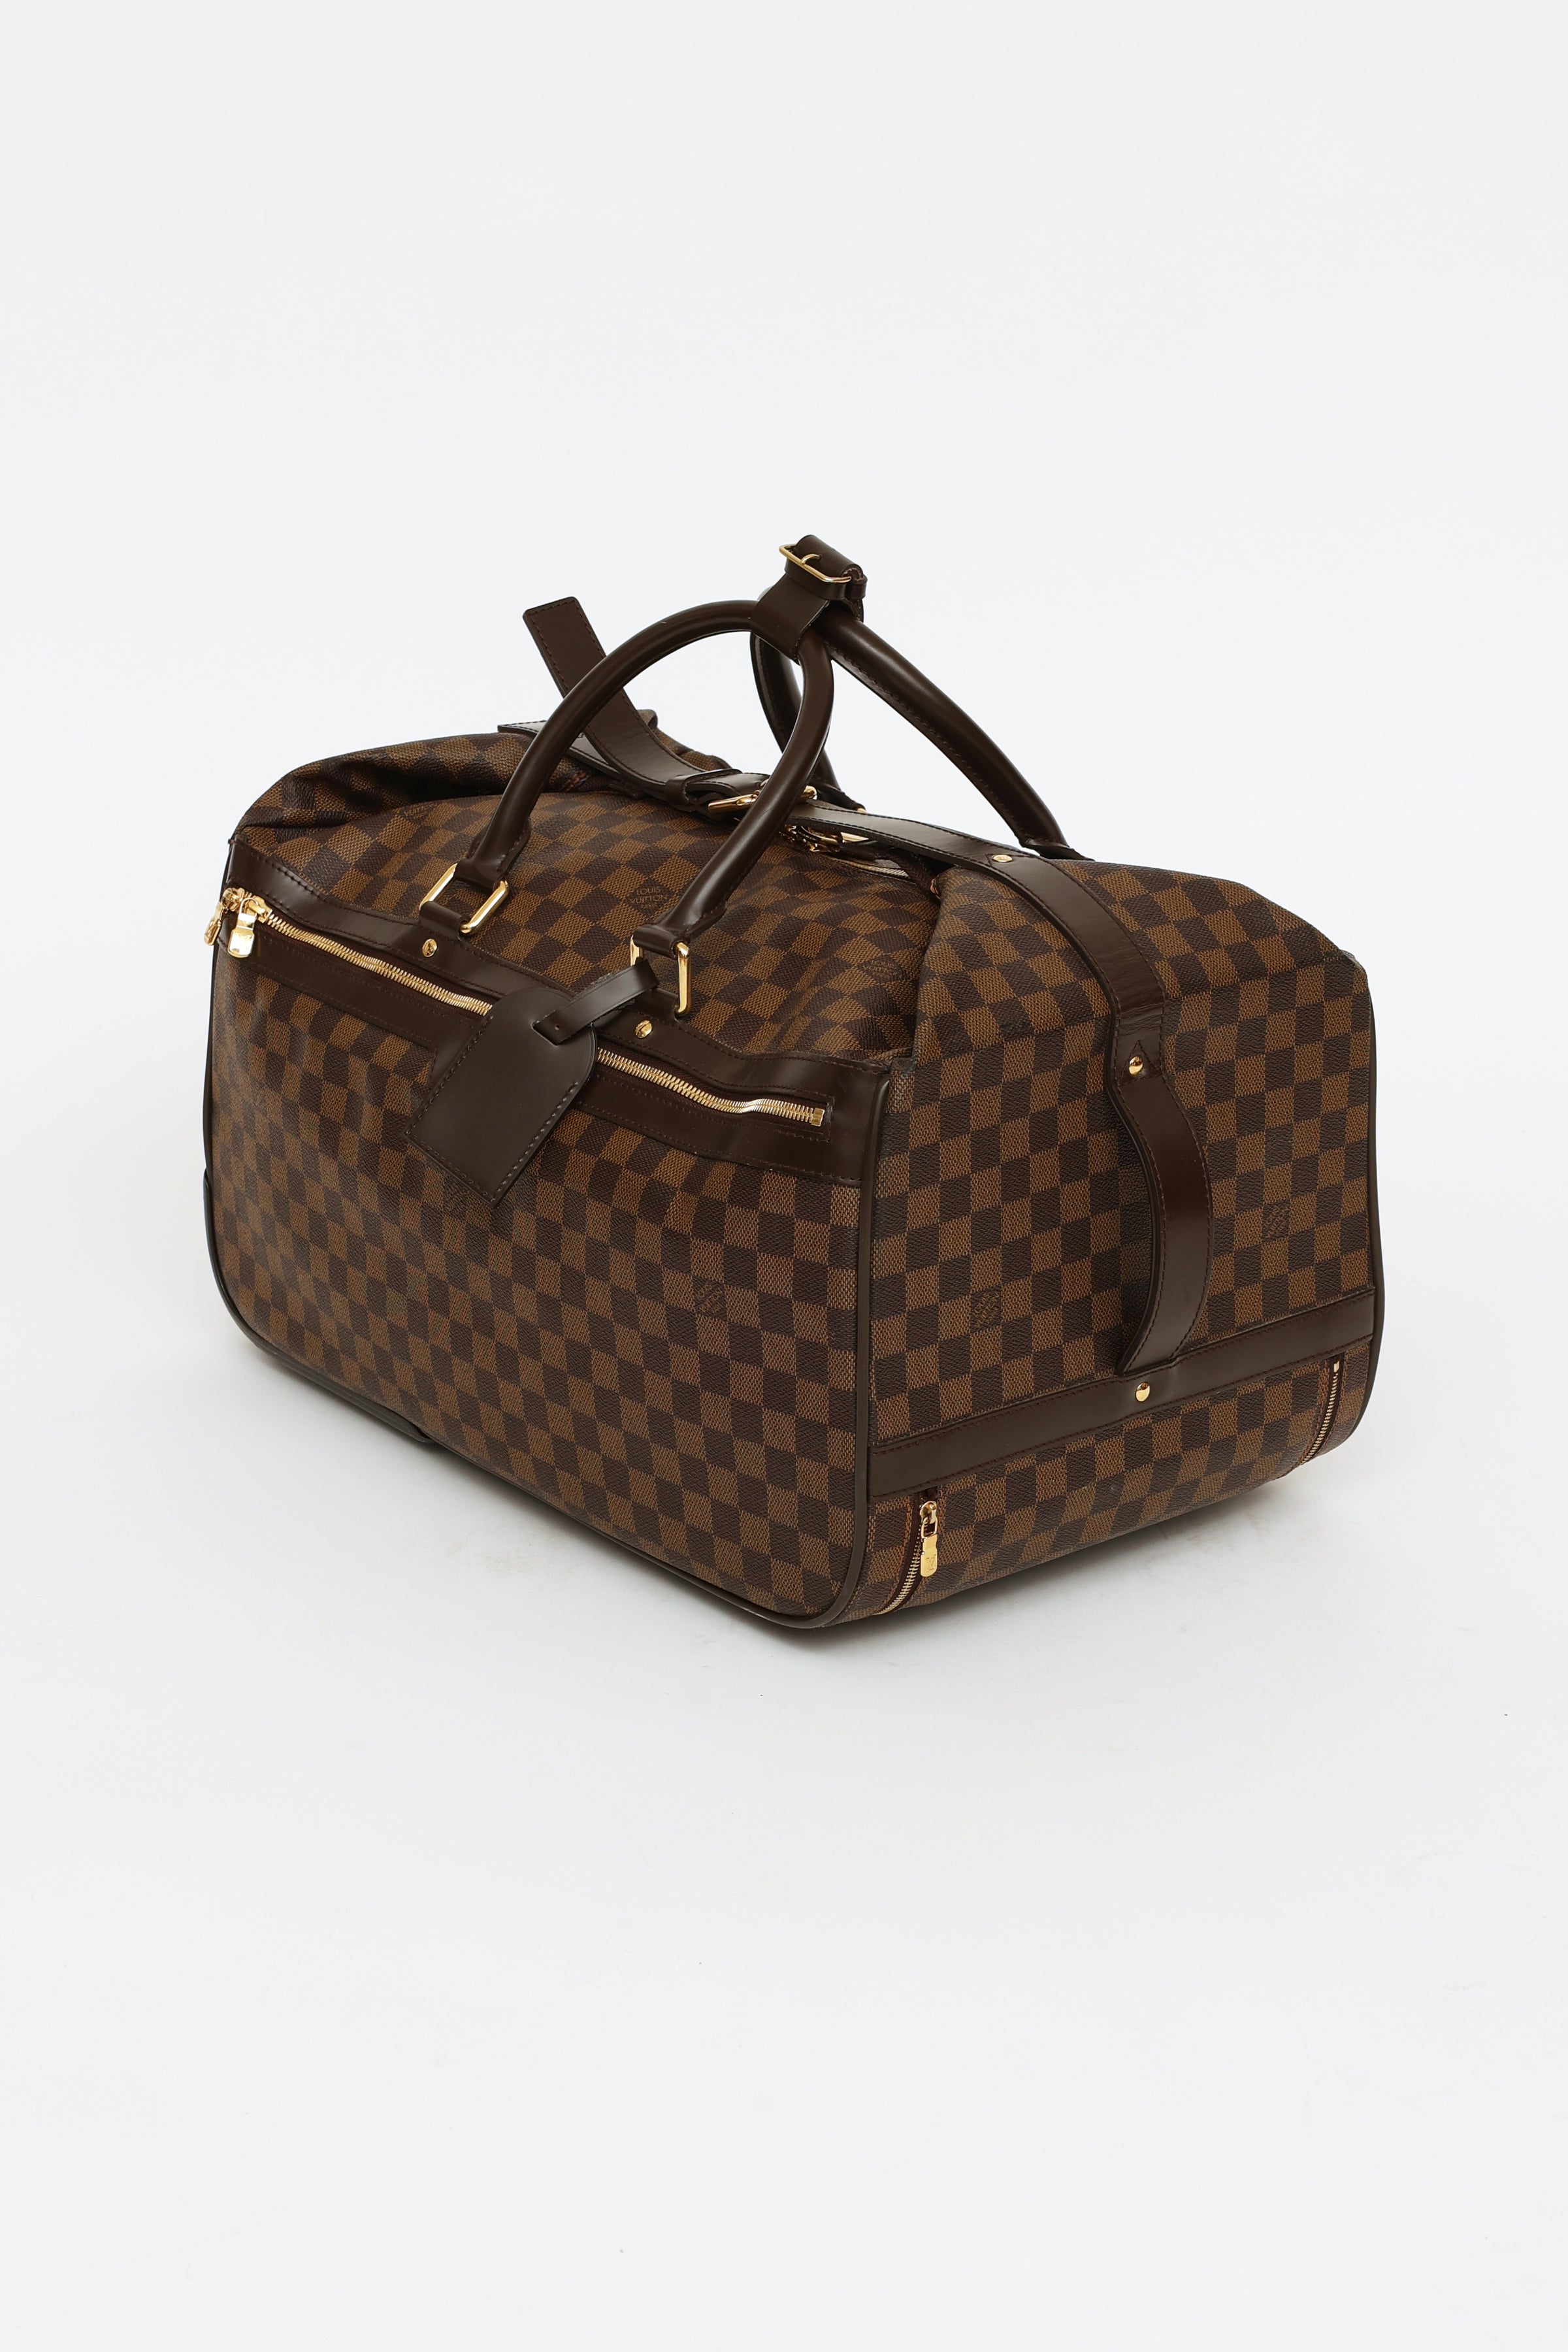 Louis Vuitton Duffle Eole Damier Ebene 50 Rolling Luggage 2way